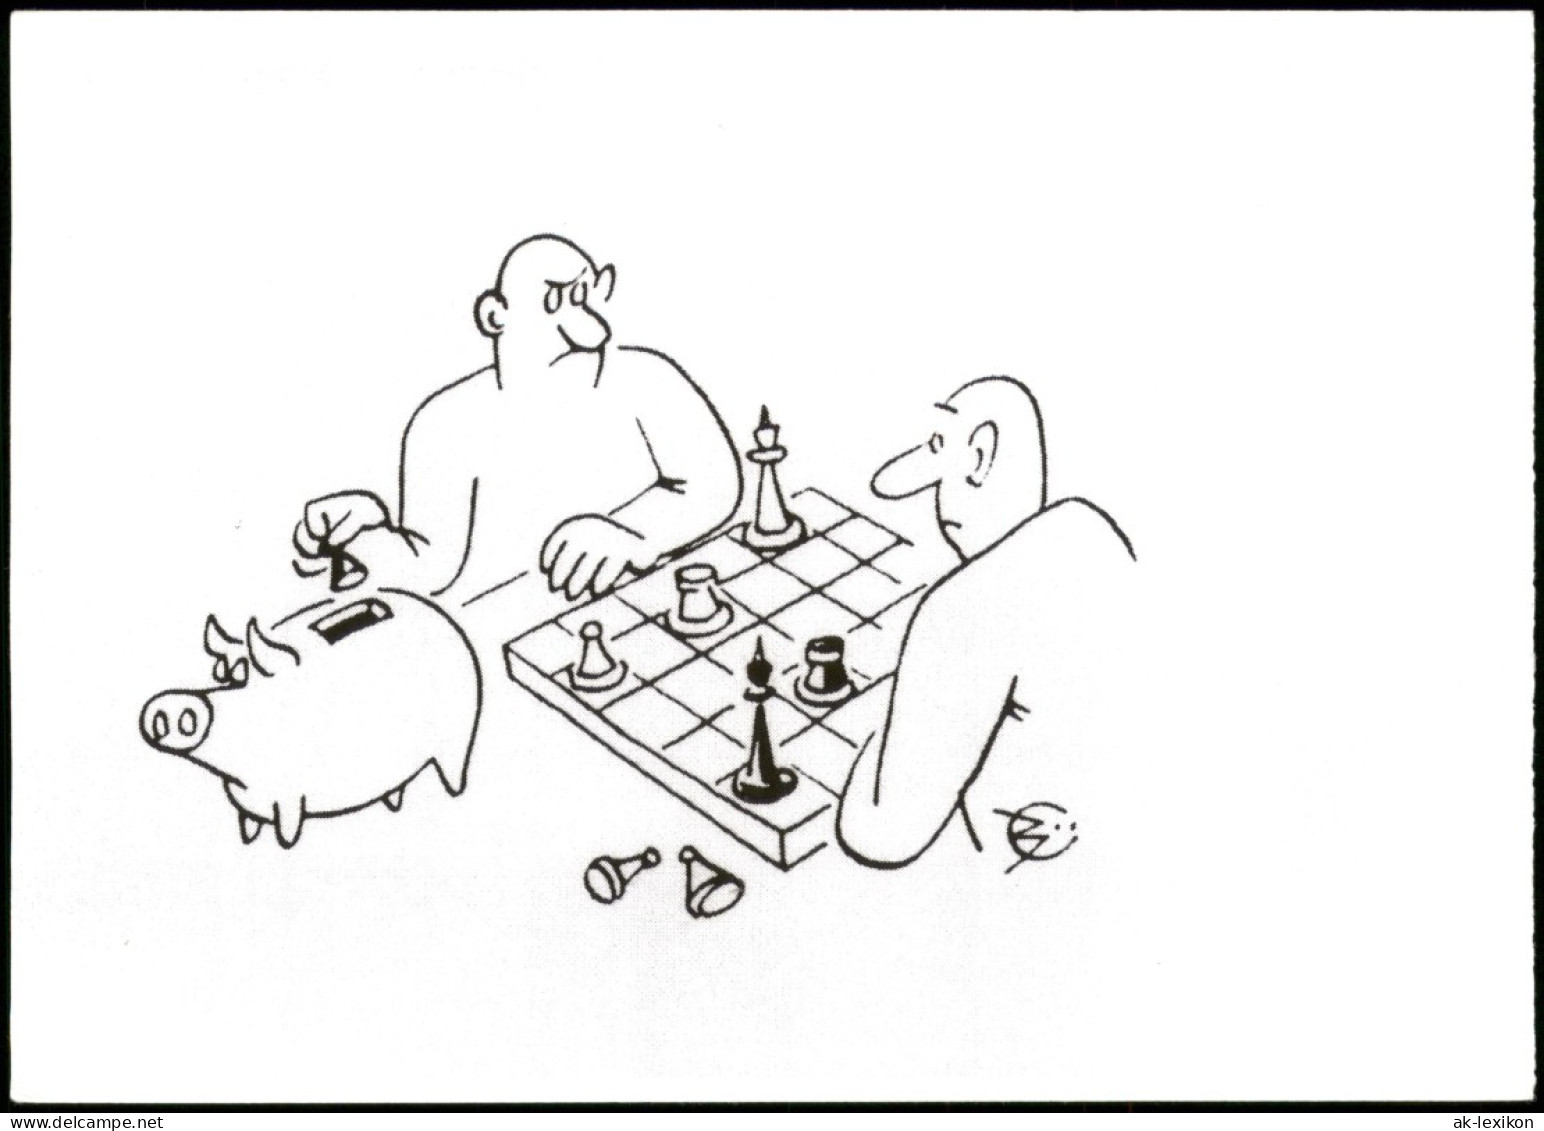 Ansichtskarte  Schach (Chess) Motivkarte, Schachspieler, Sparschwein 2000 - Contemporain (à Partir De 1950)